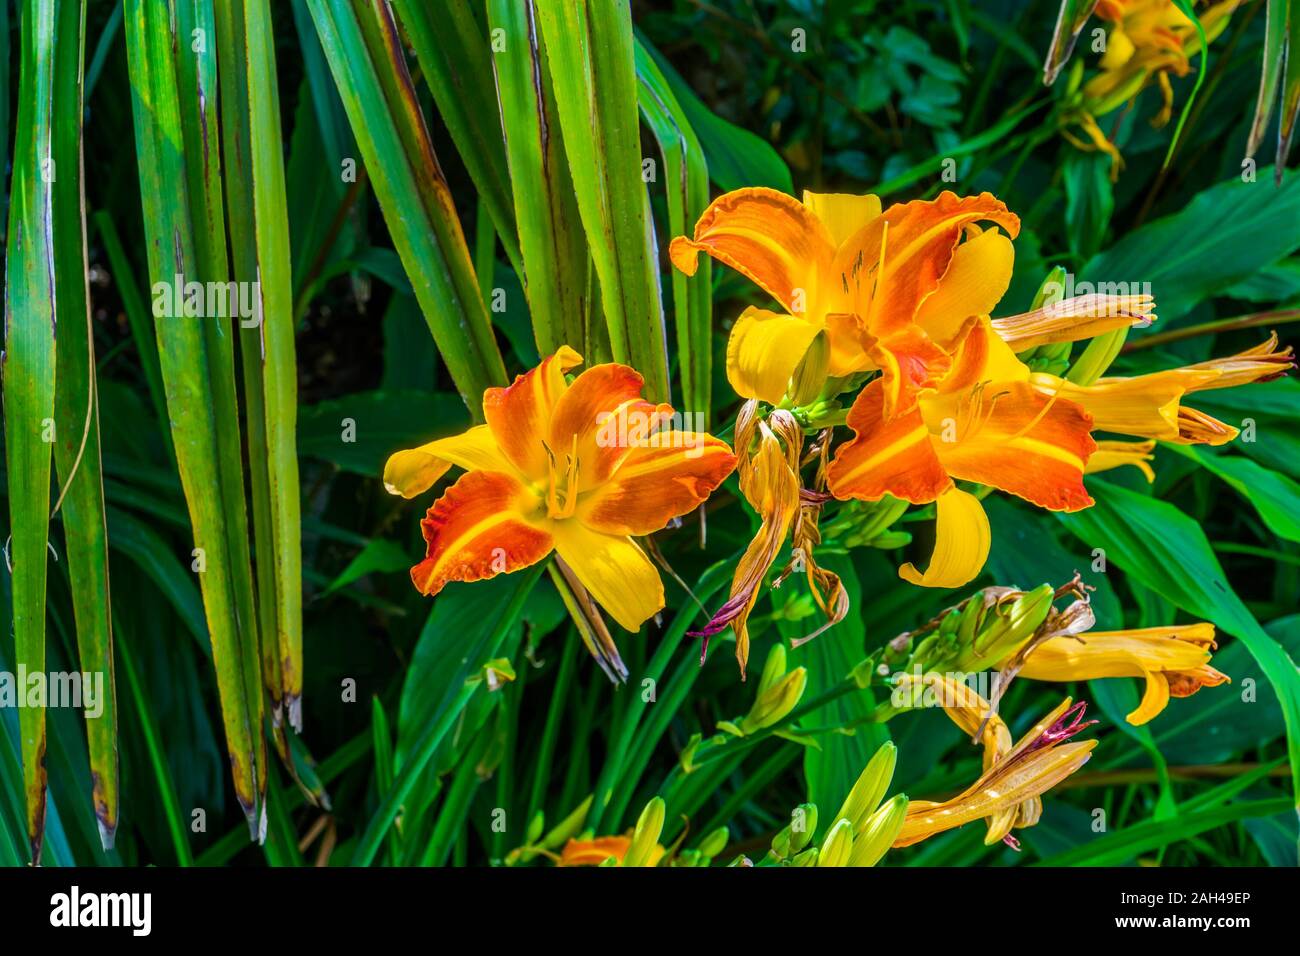 hemerocallis frans hals, Dutch cultivar specie of the daylily, popular colorful garden flowers Stock Photo